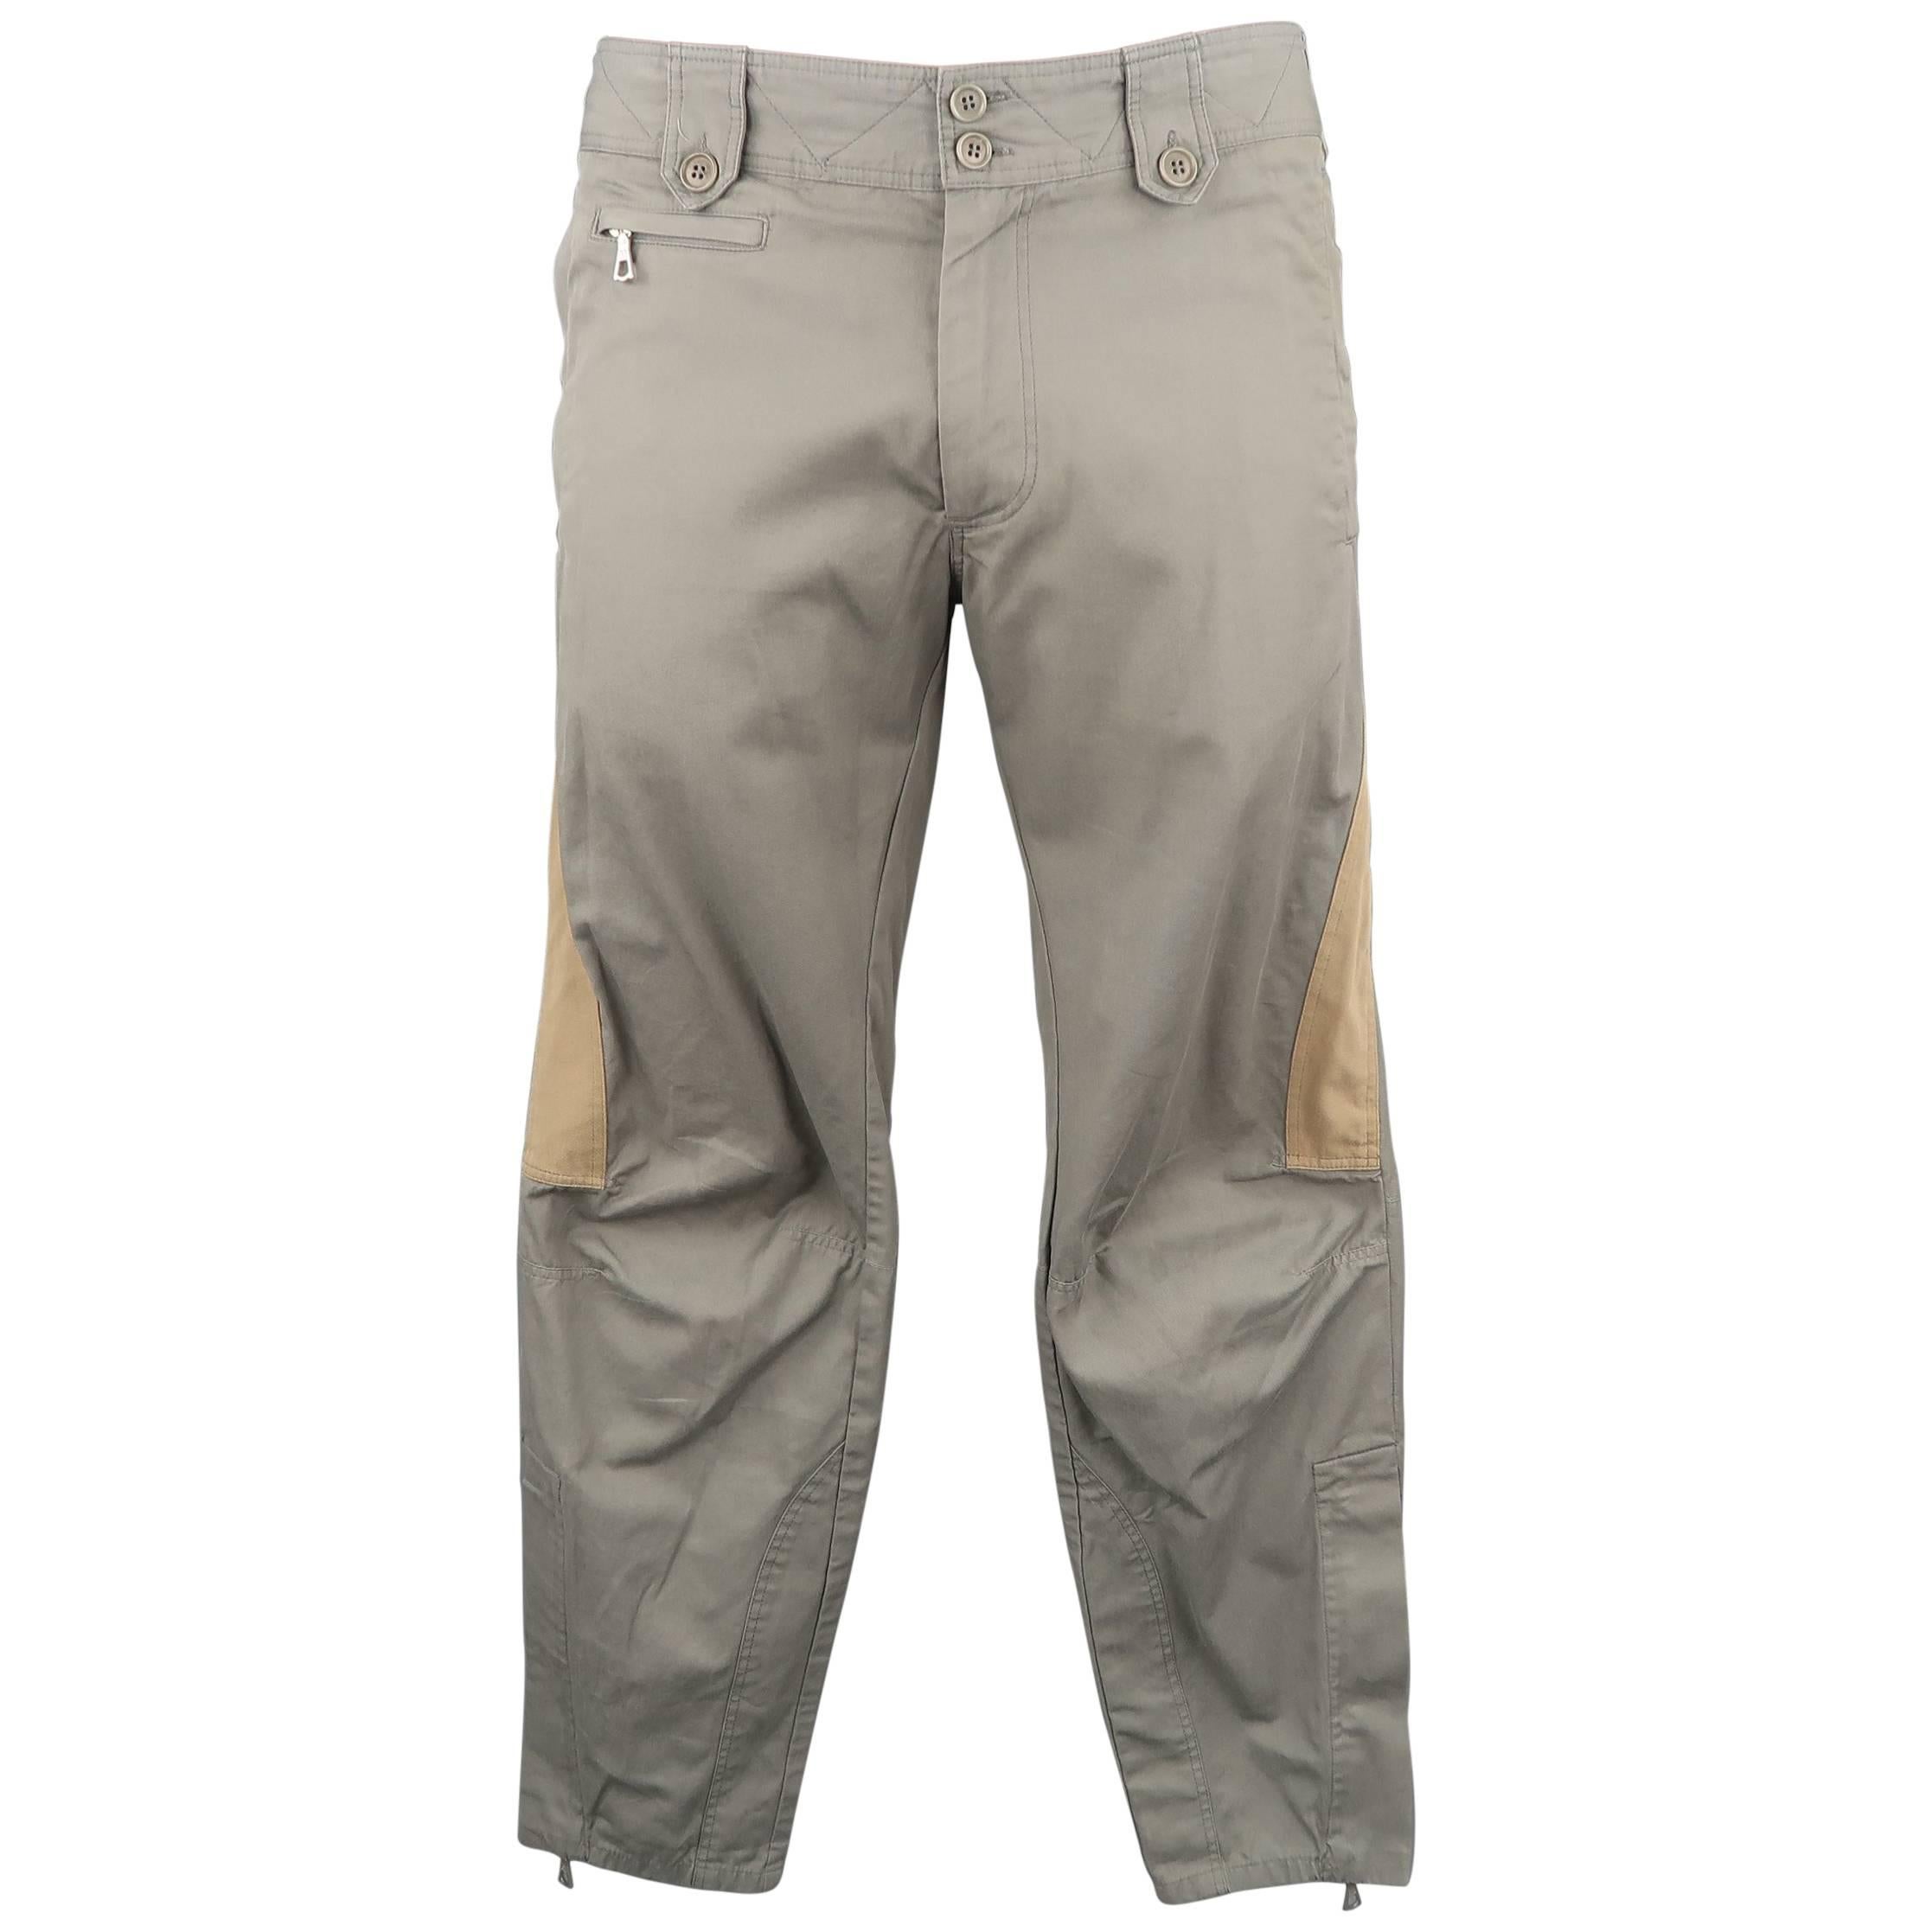 Dries Van Noten Men's Gray Cotton Tan Stripe motorcycle Pants